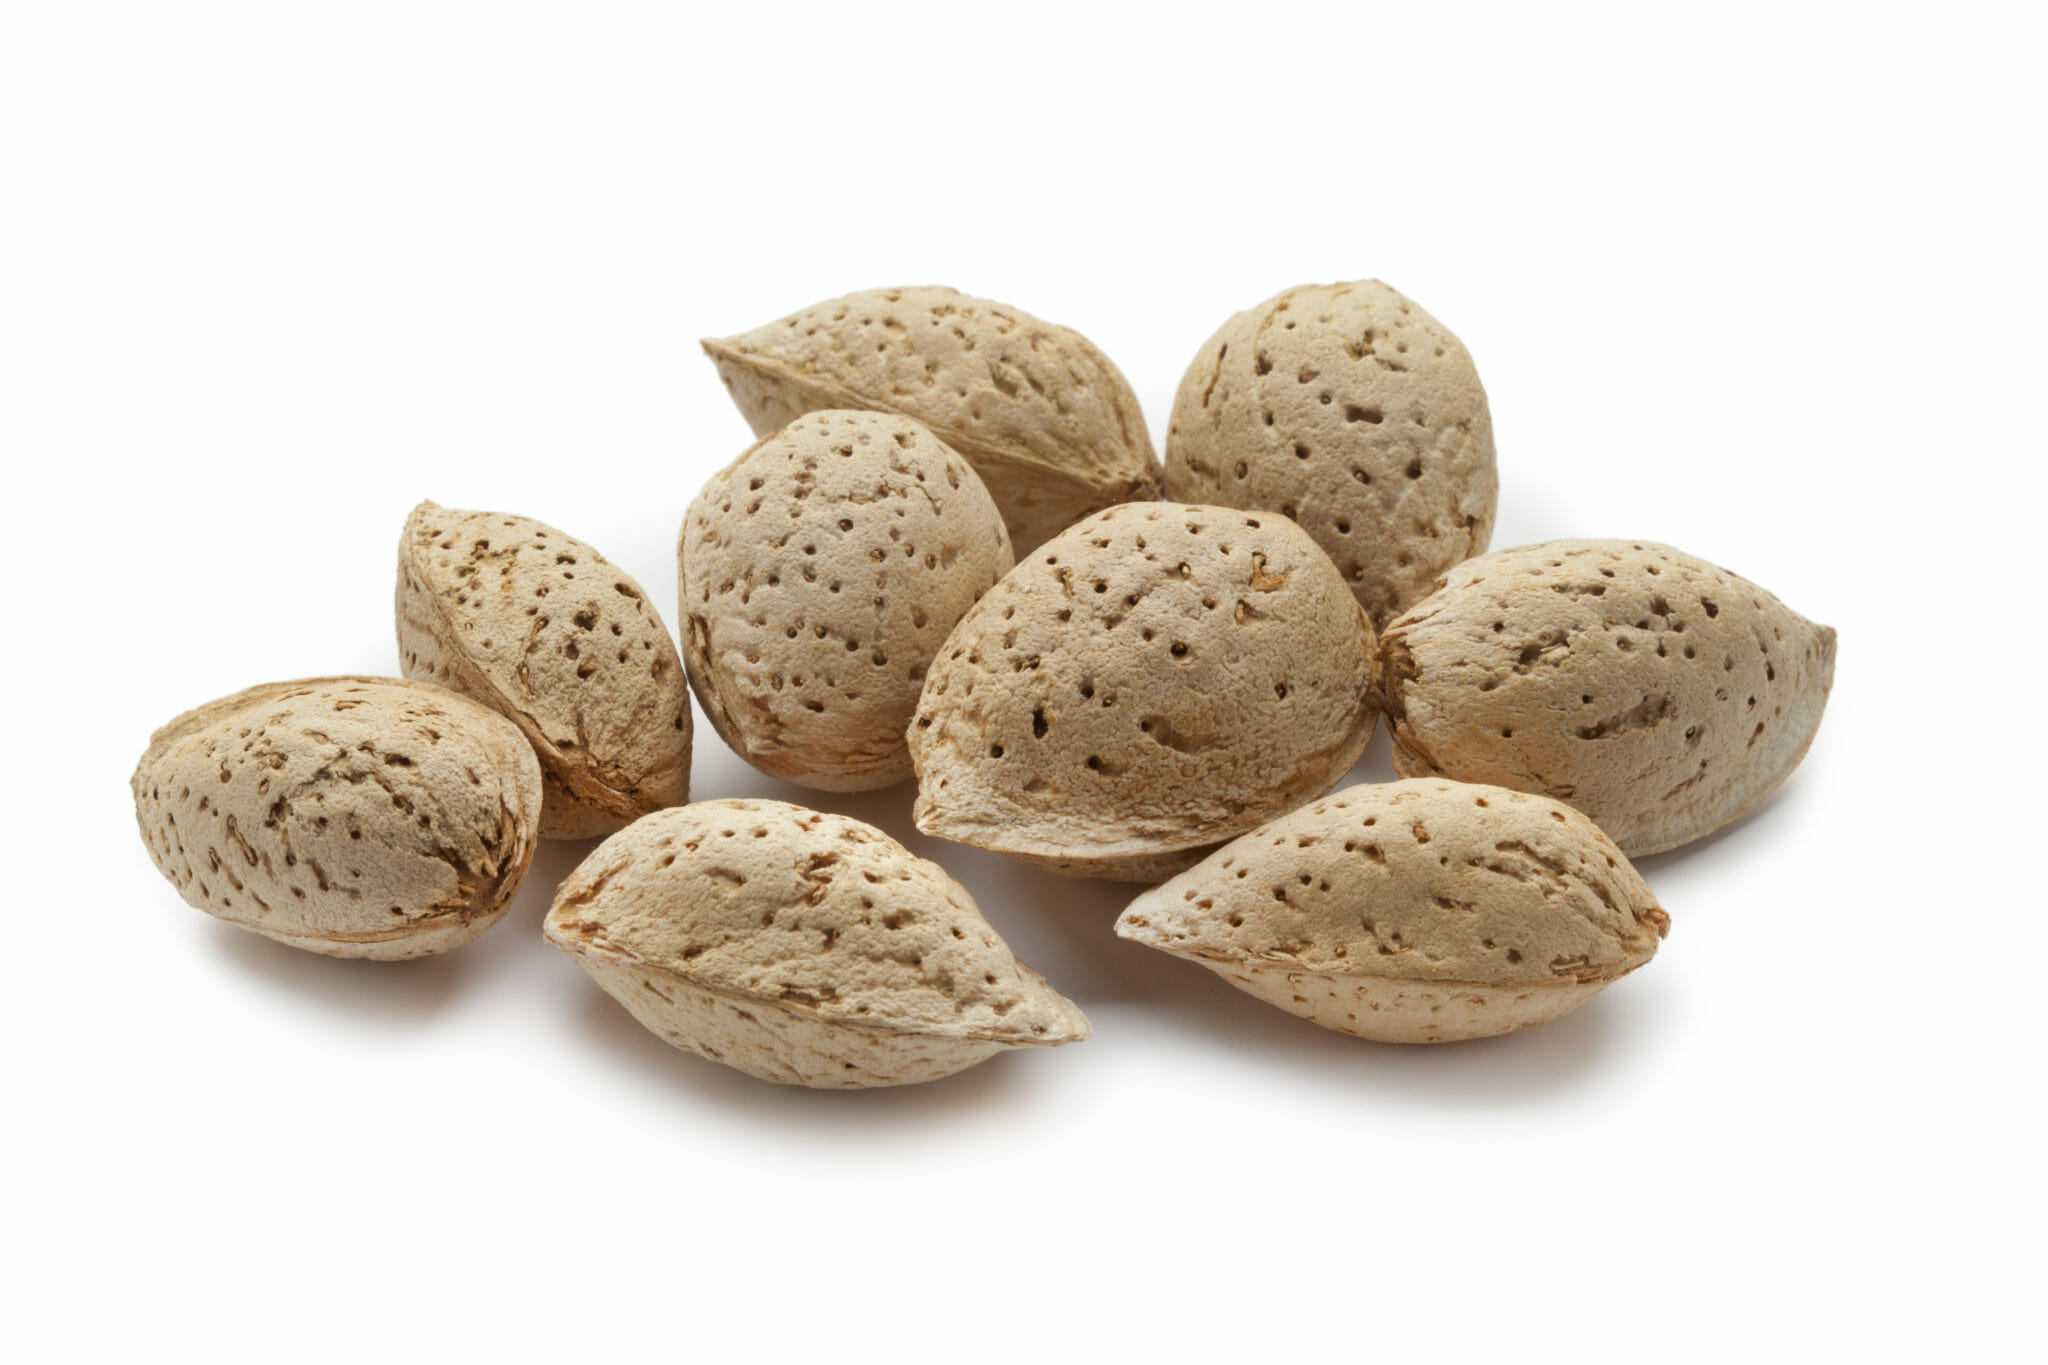 Almonds in shells.